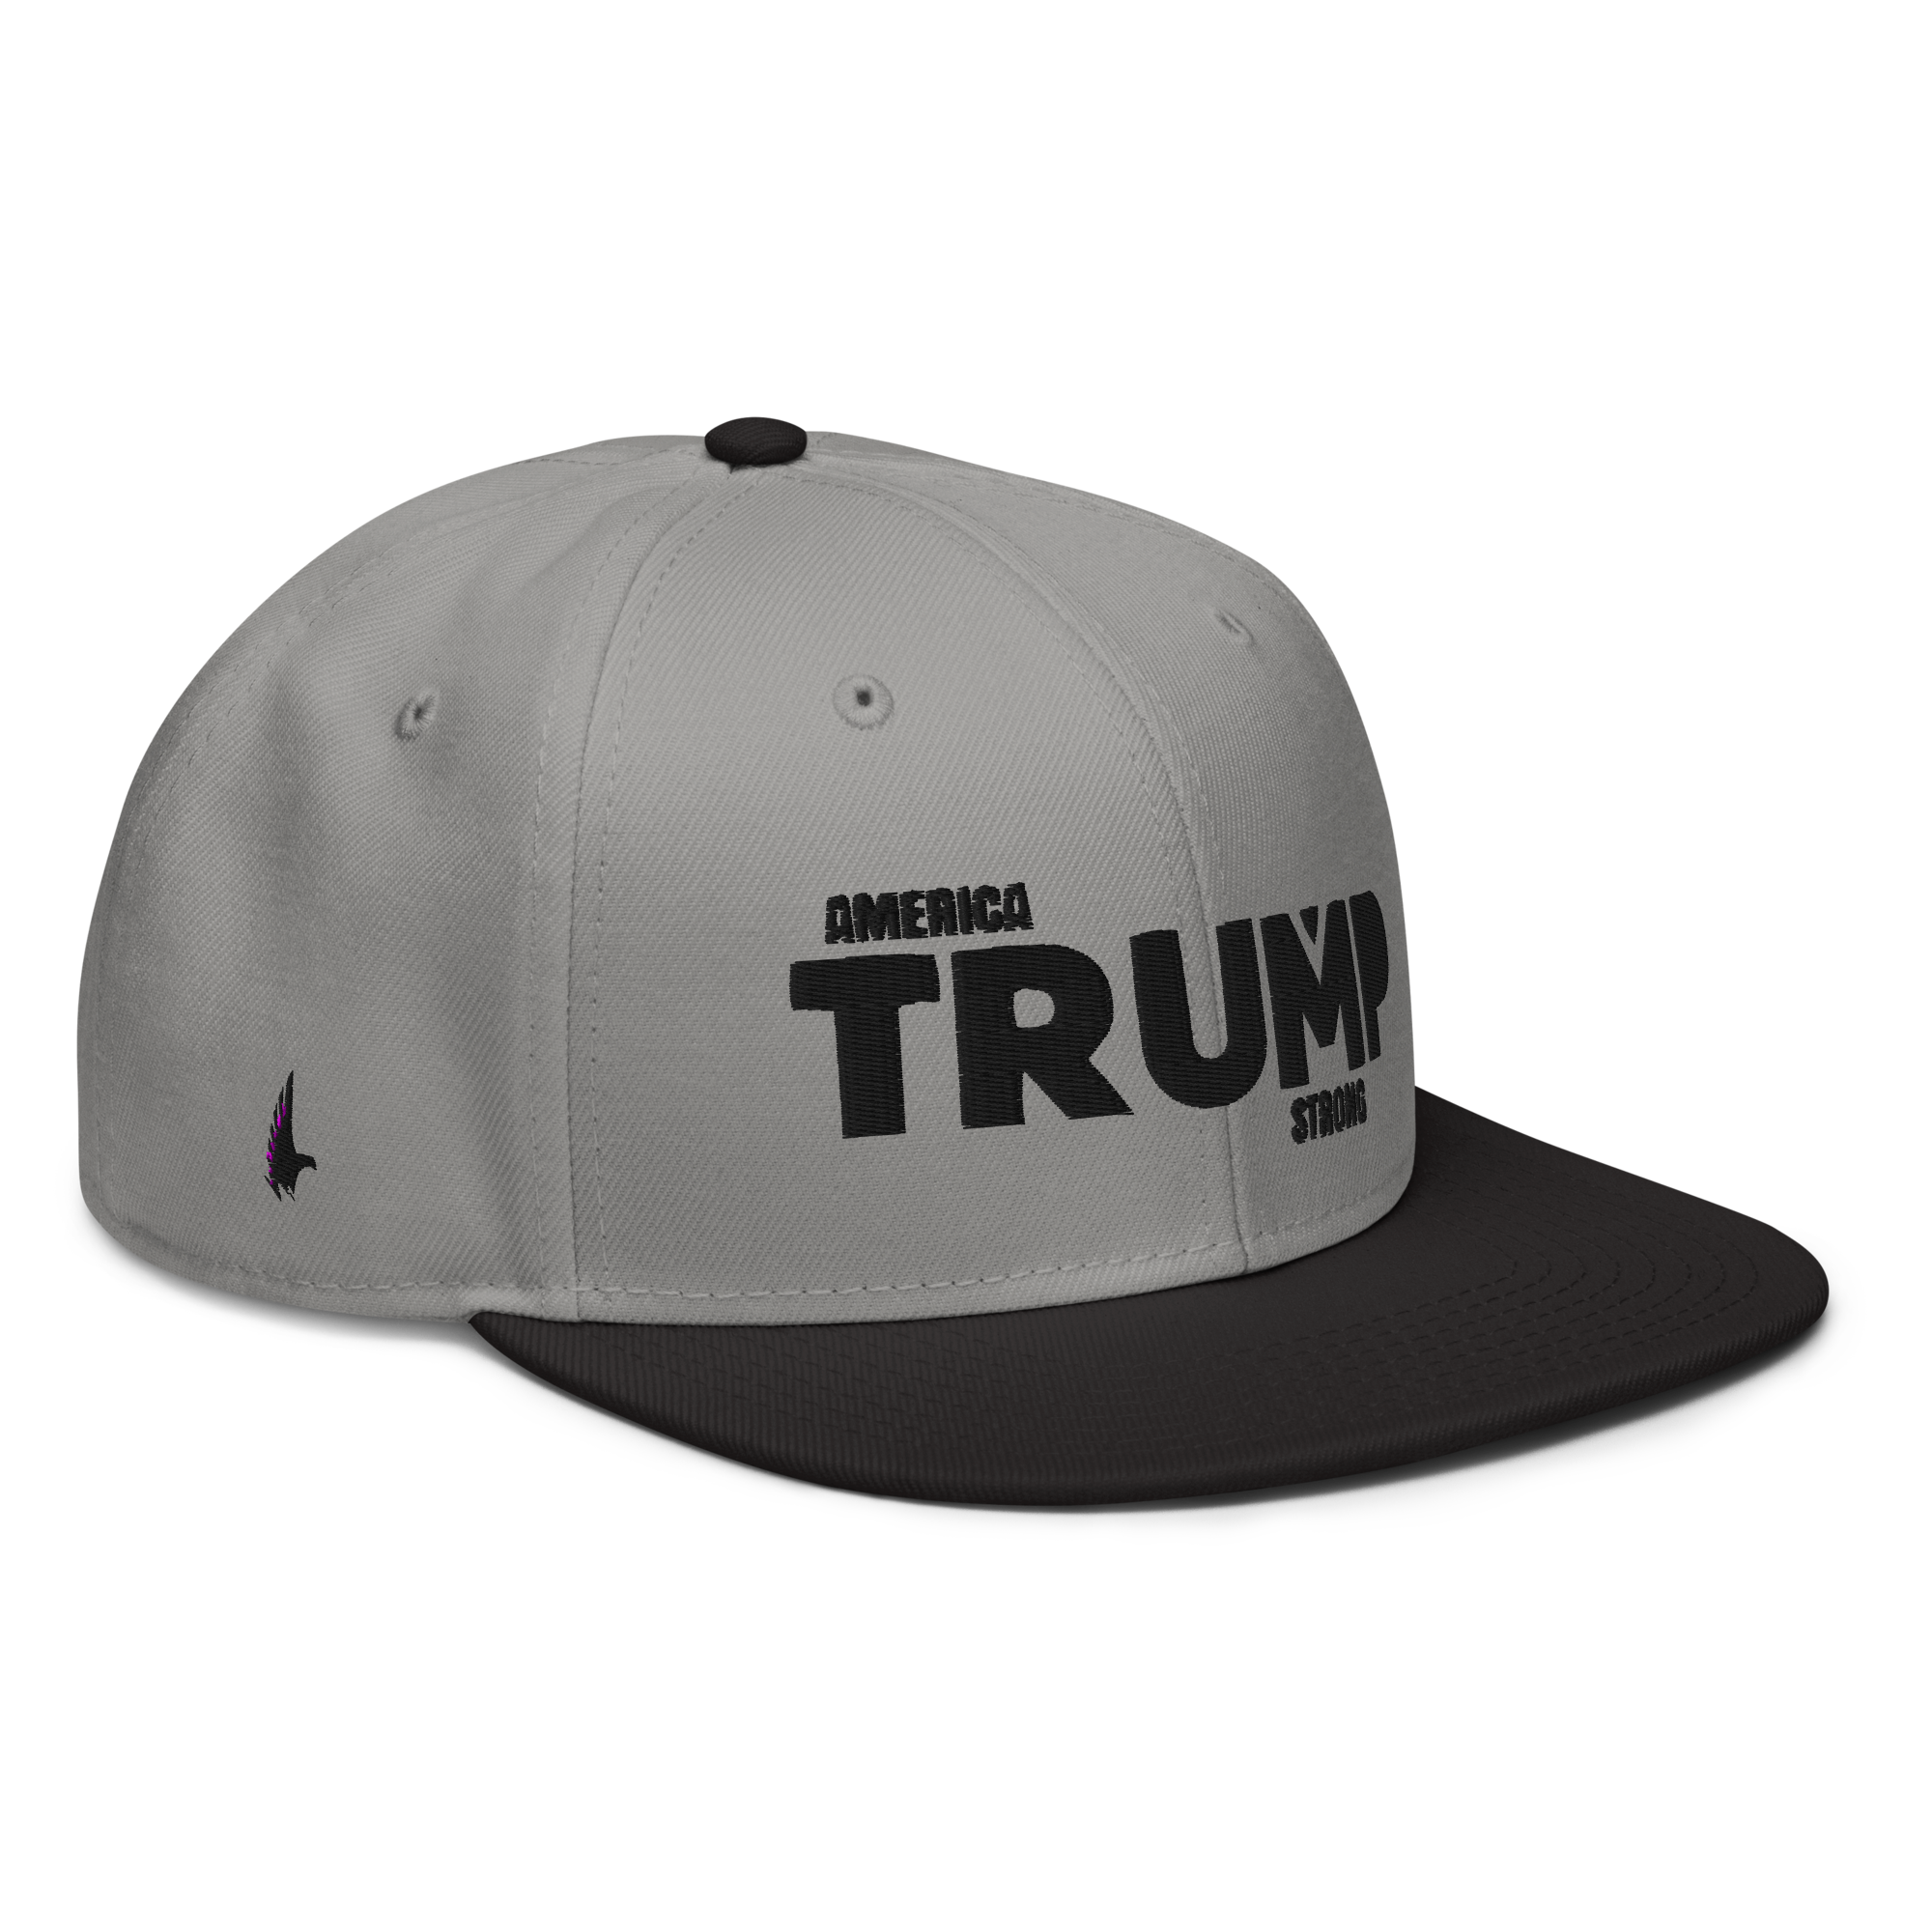 Loyalty Vibes America Trump Strong Snapback Hat Grey Black Black One size - Loyalty Vibes